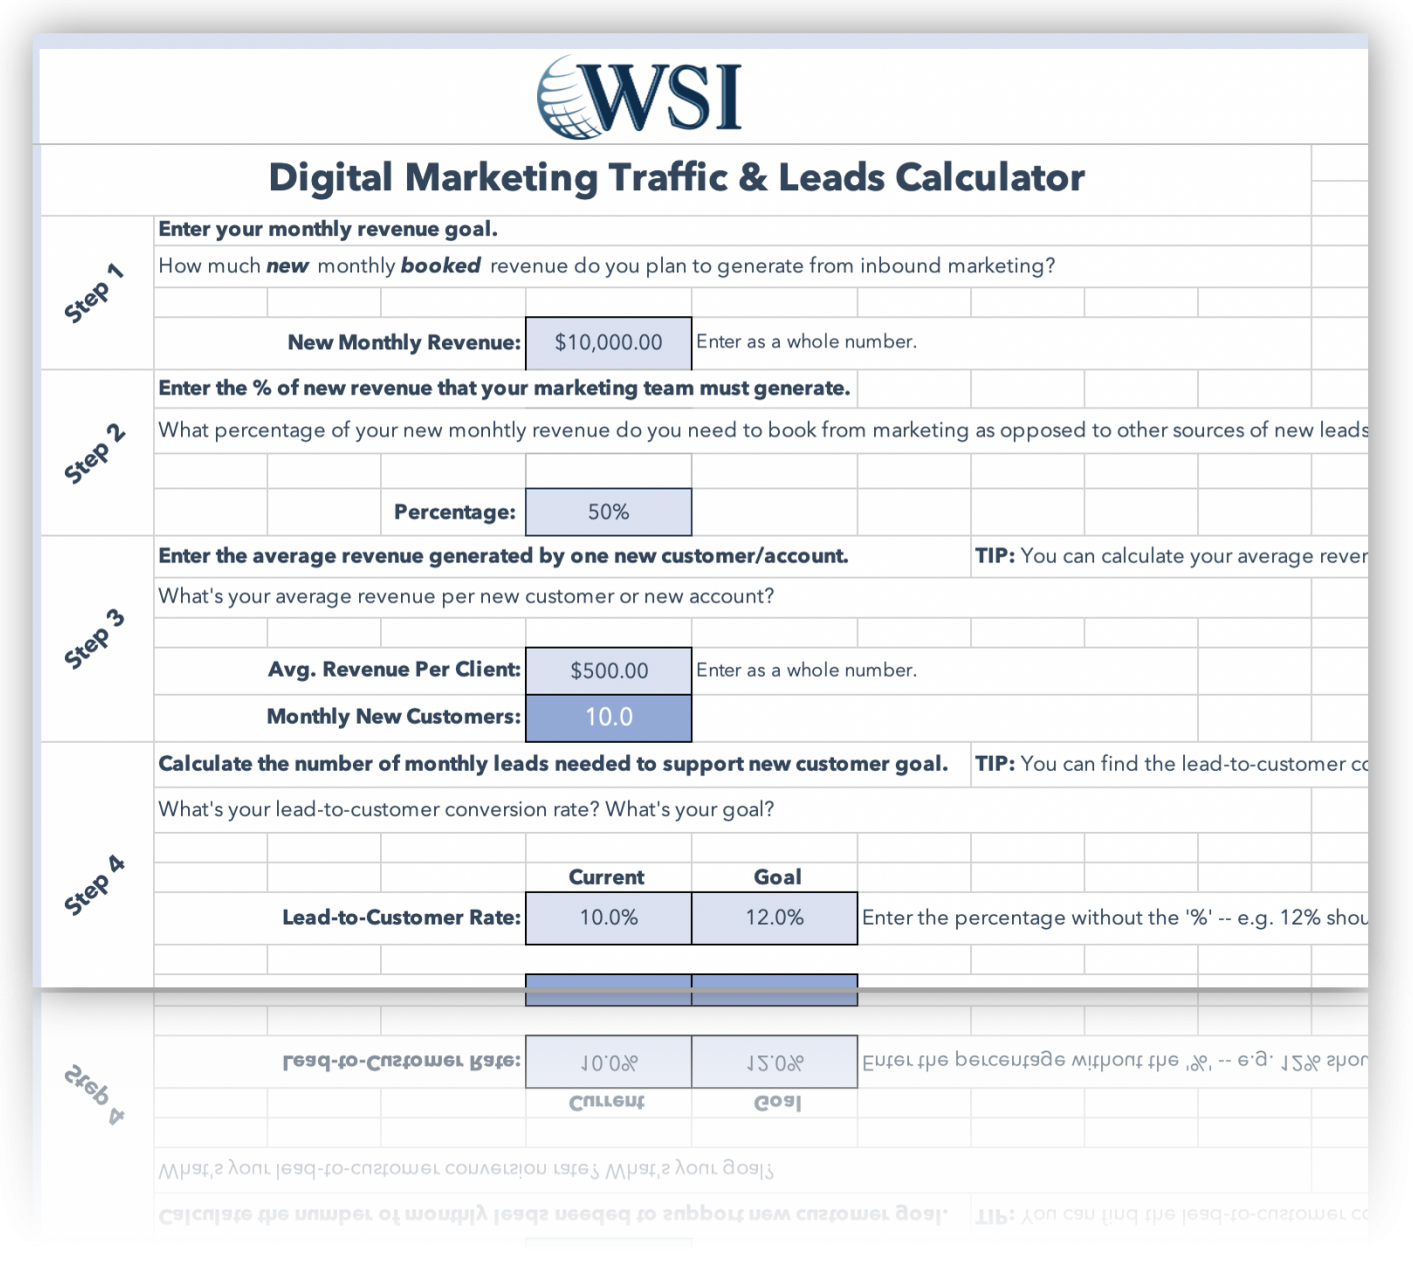 WSI traffic and leads calculator